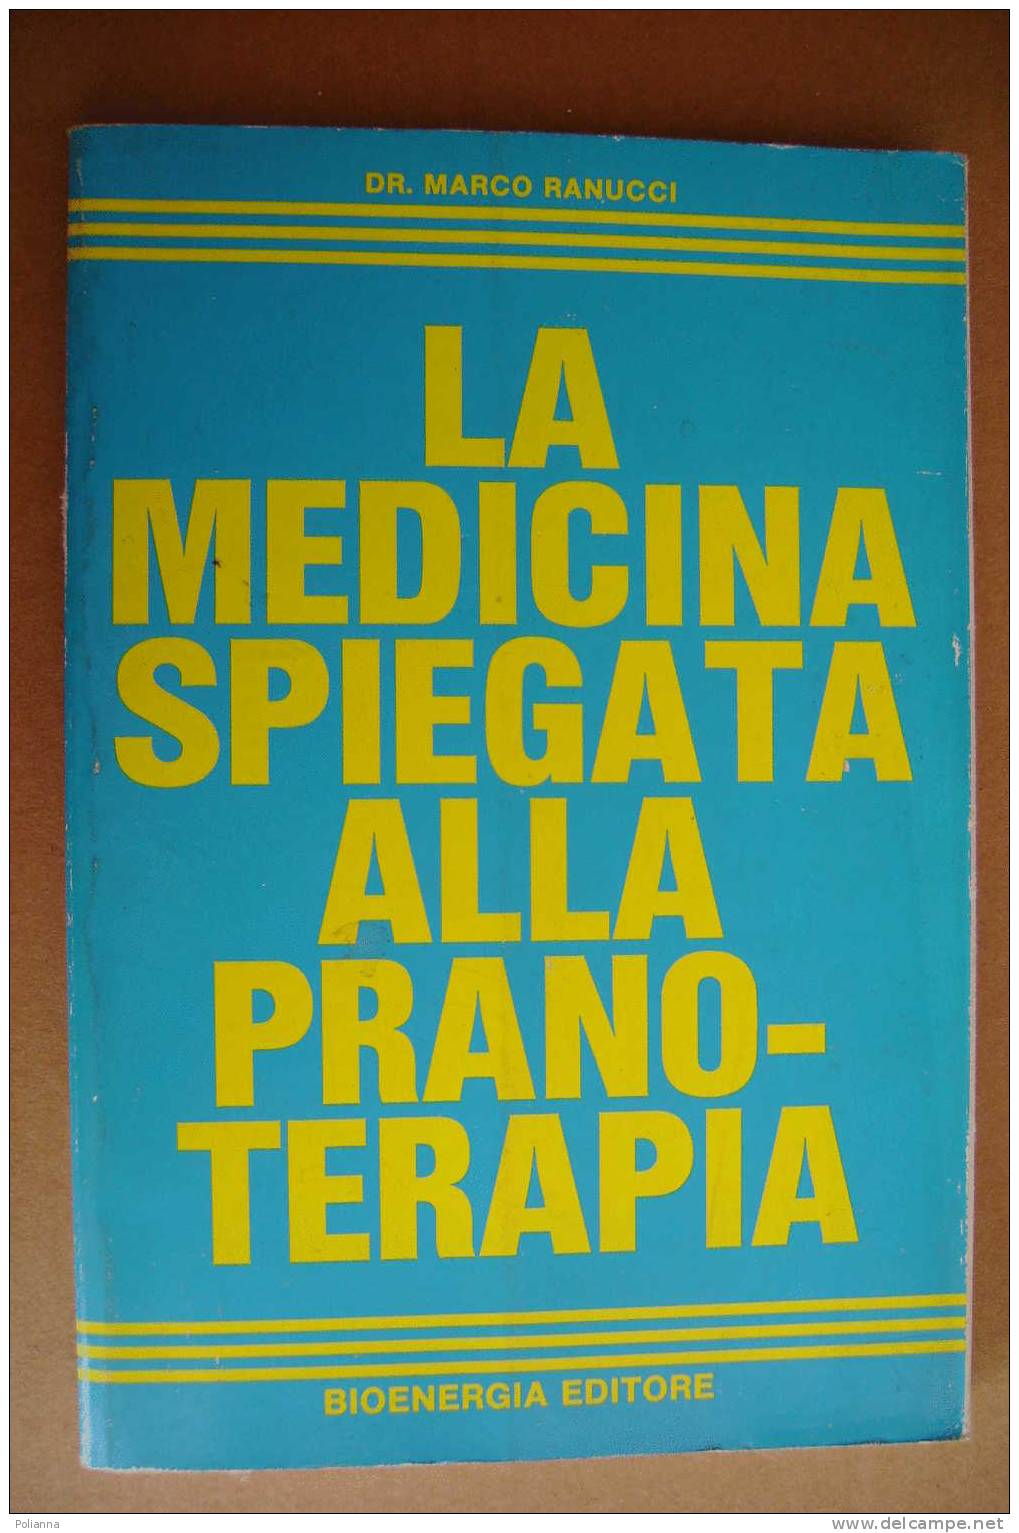 PAO/32 Dr.Marco Ranucci LA MEDICINA SPIEGATA ALLA PRANOTERAPIA Bioenergia Edit. 1985 - Medizin, Psychologie